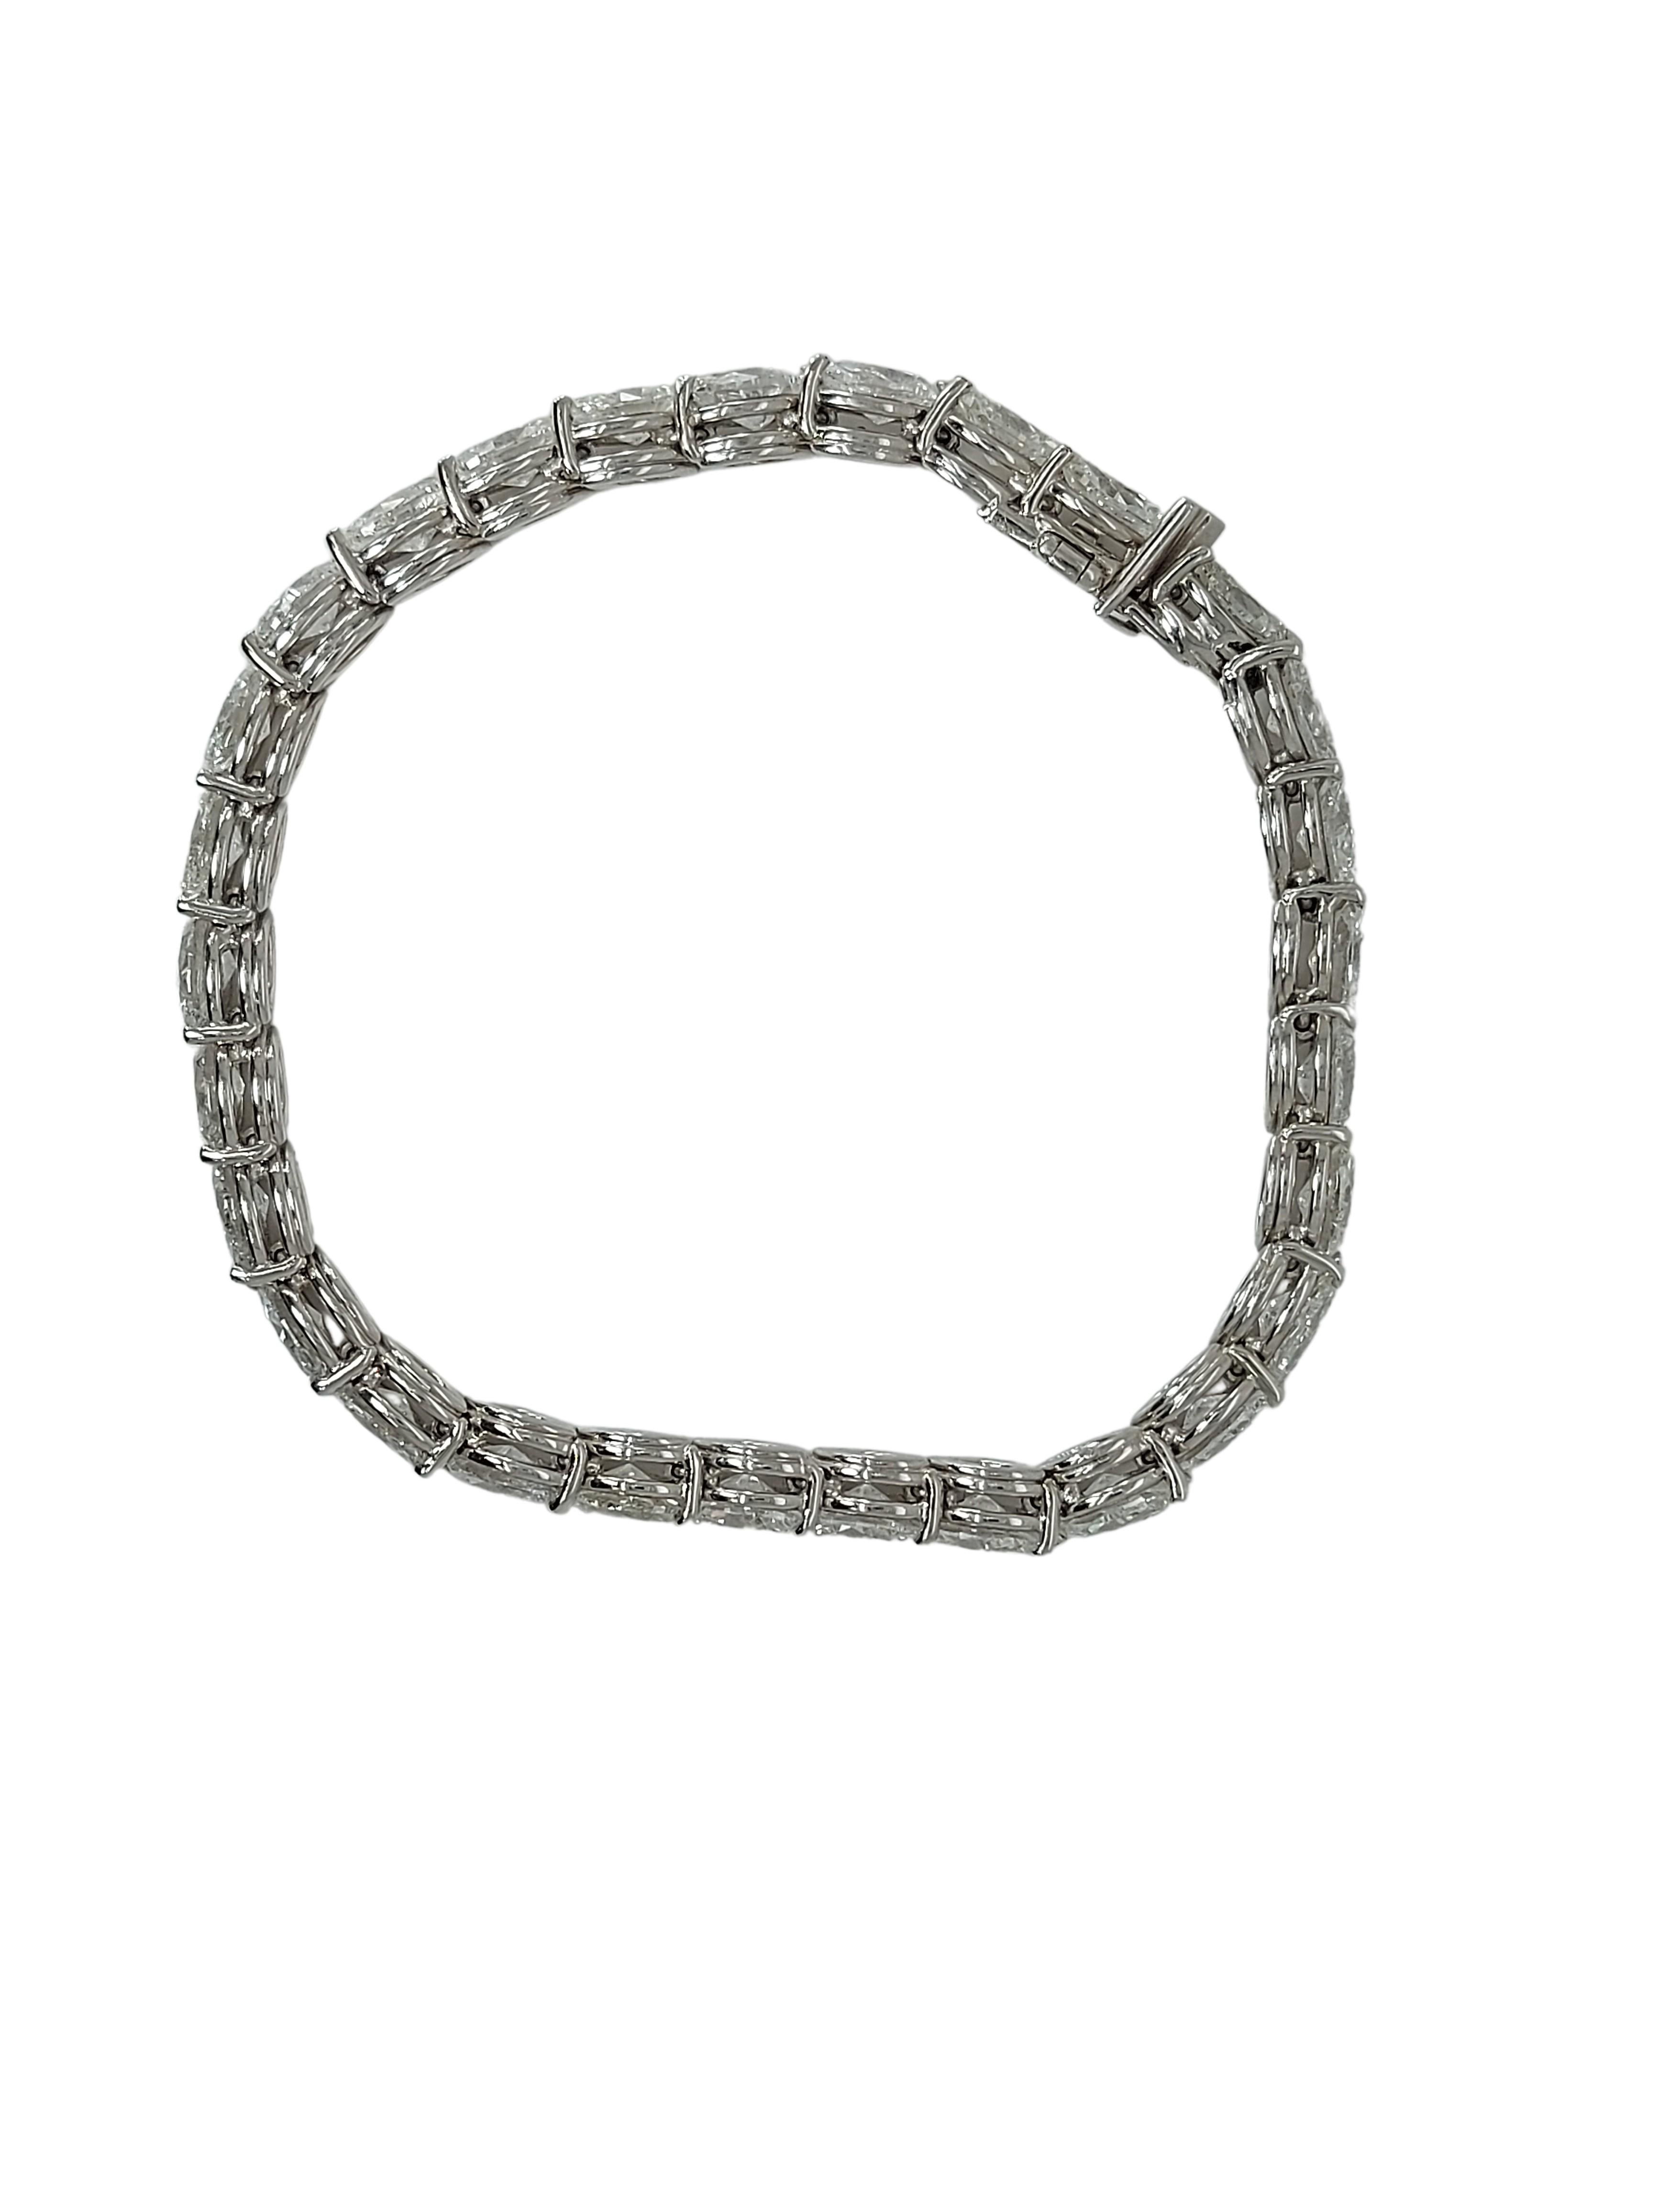 Gorgeous Tennis Diamond Bracelet with 11.6 Ct  Marquise Cut Diamonds For Sale 2